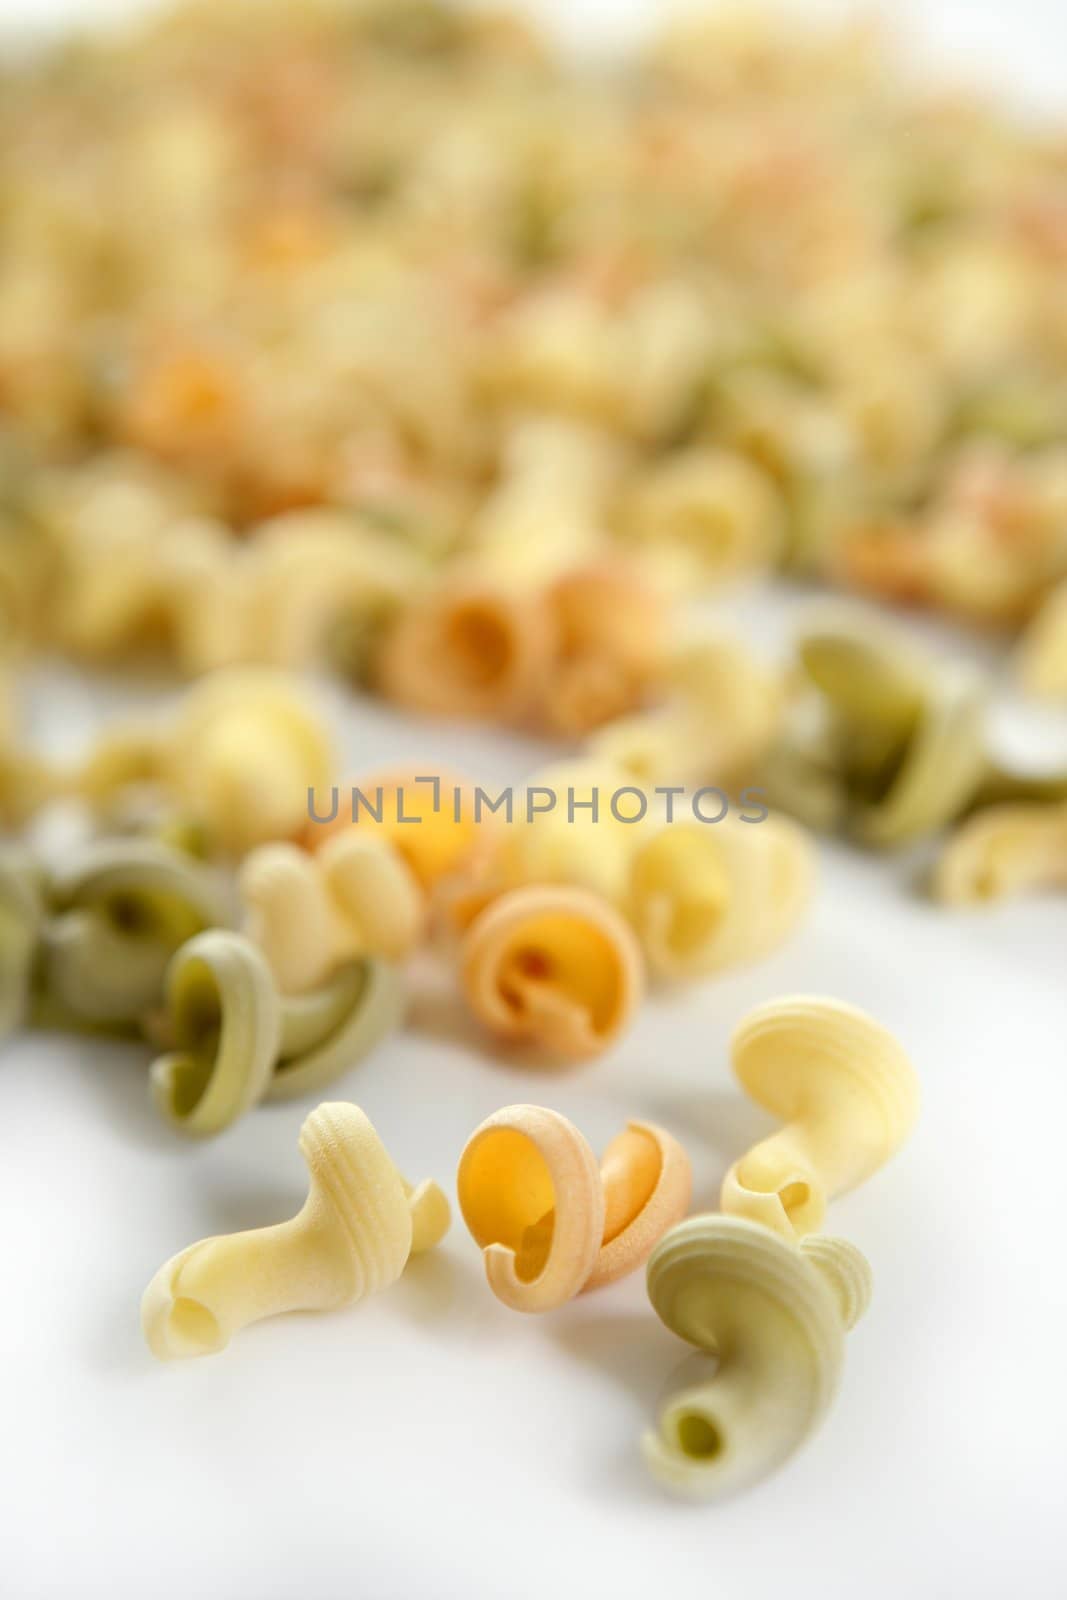 Snail shape Italian pasta texture by lunamarina